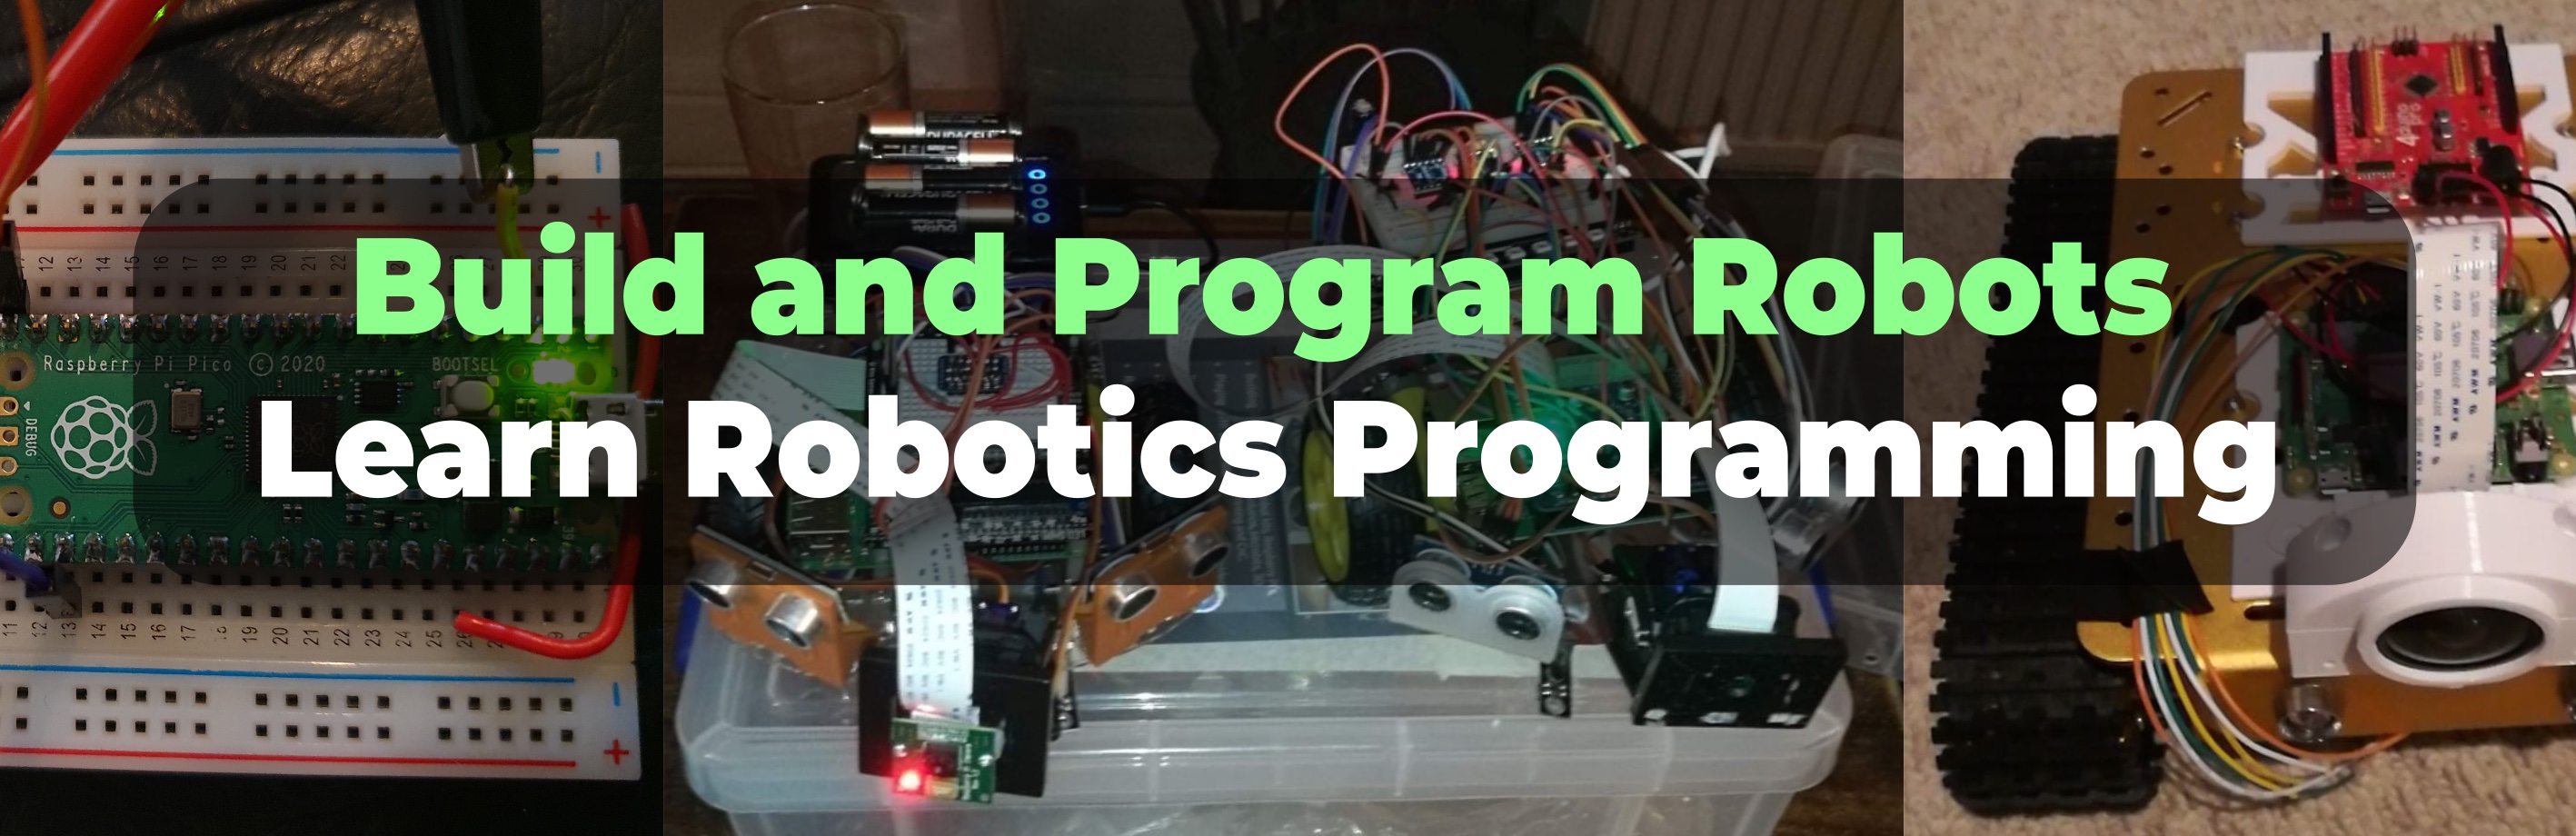 Build and Program Robots - Learn Robotics Programming